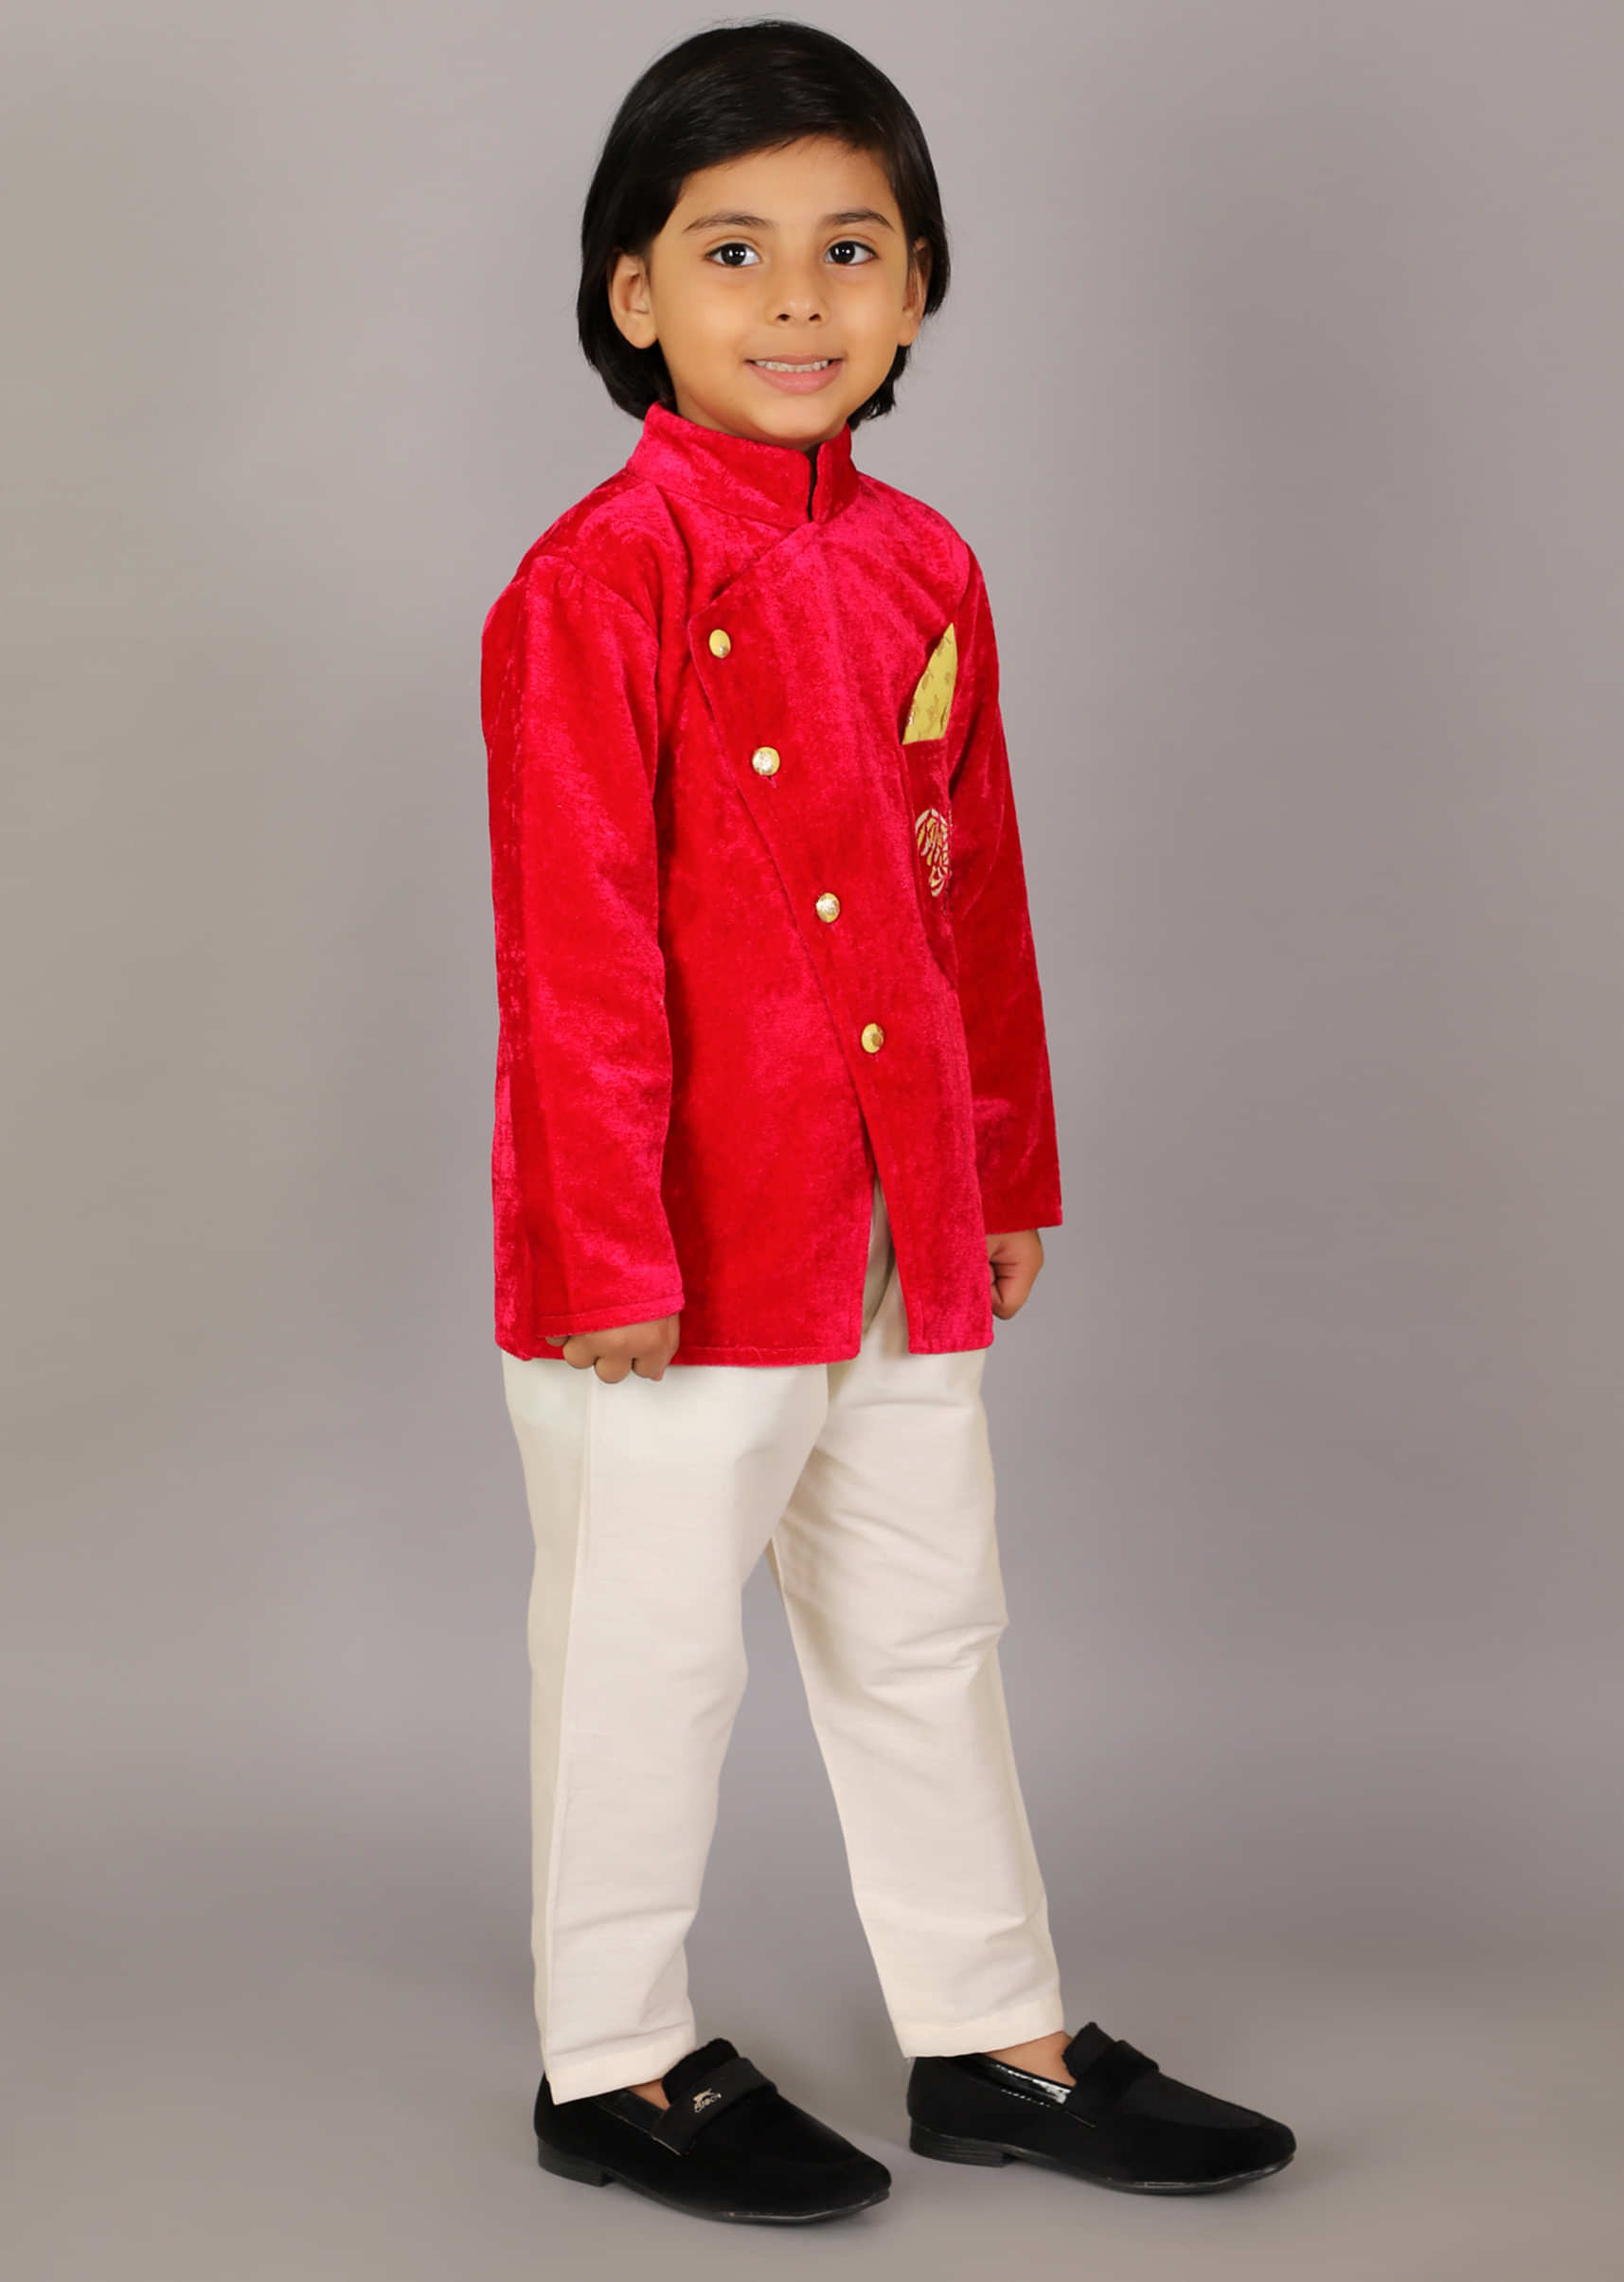 Kalki Boys Red Bandhgala Set In Velvet With Embroidered Dragonfly Design On The Pocket